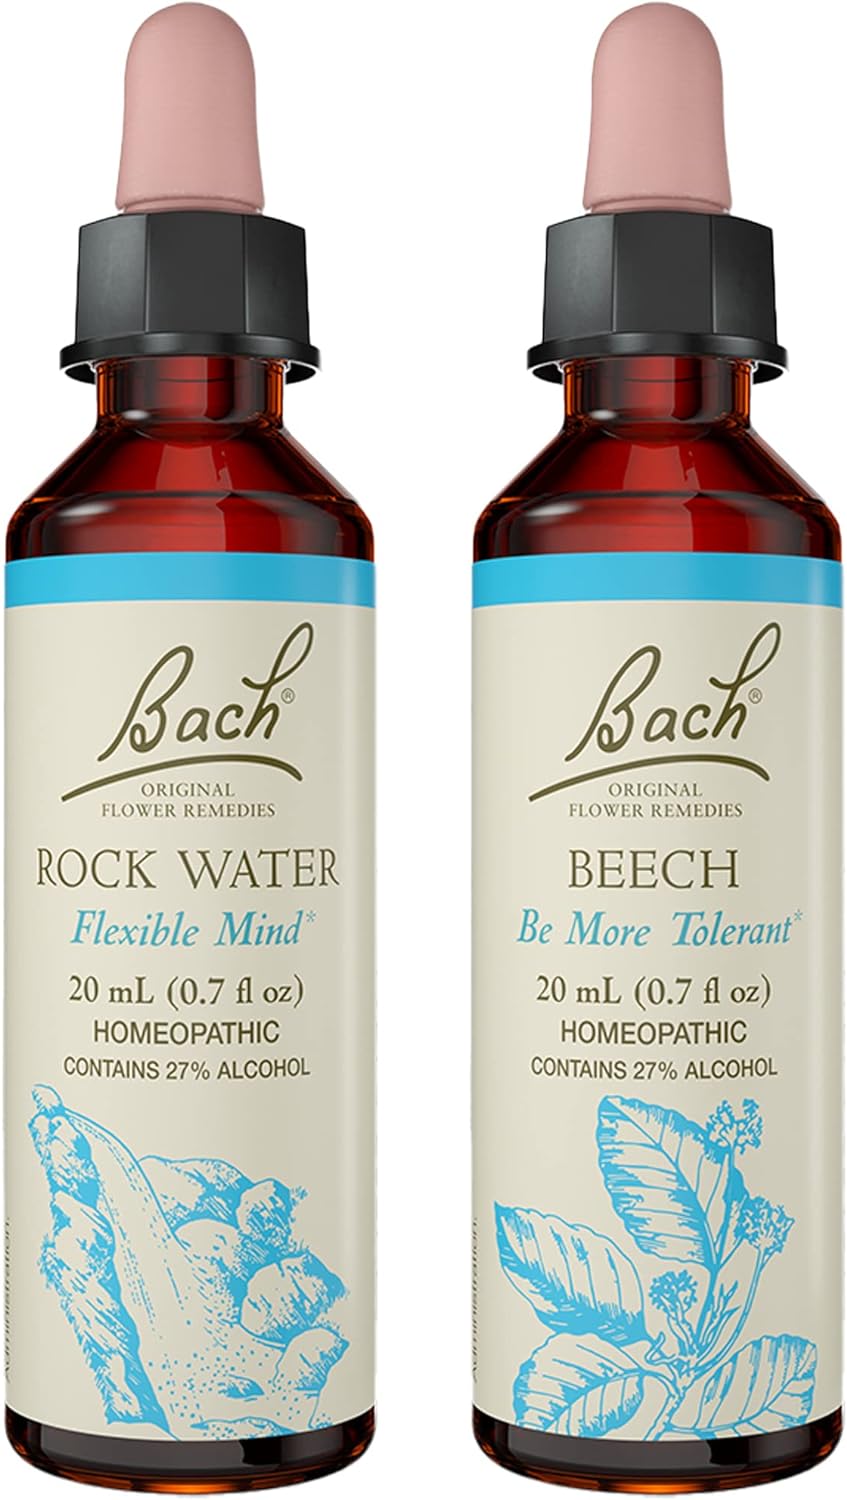 Bach Original Flower Remedies 2-Pack, Have Tolerance" - Beech, Rock Water, Homeopathic Flower Essences, Vegan, 20mL Dropper x2